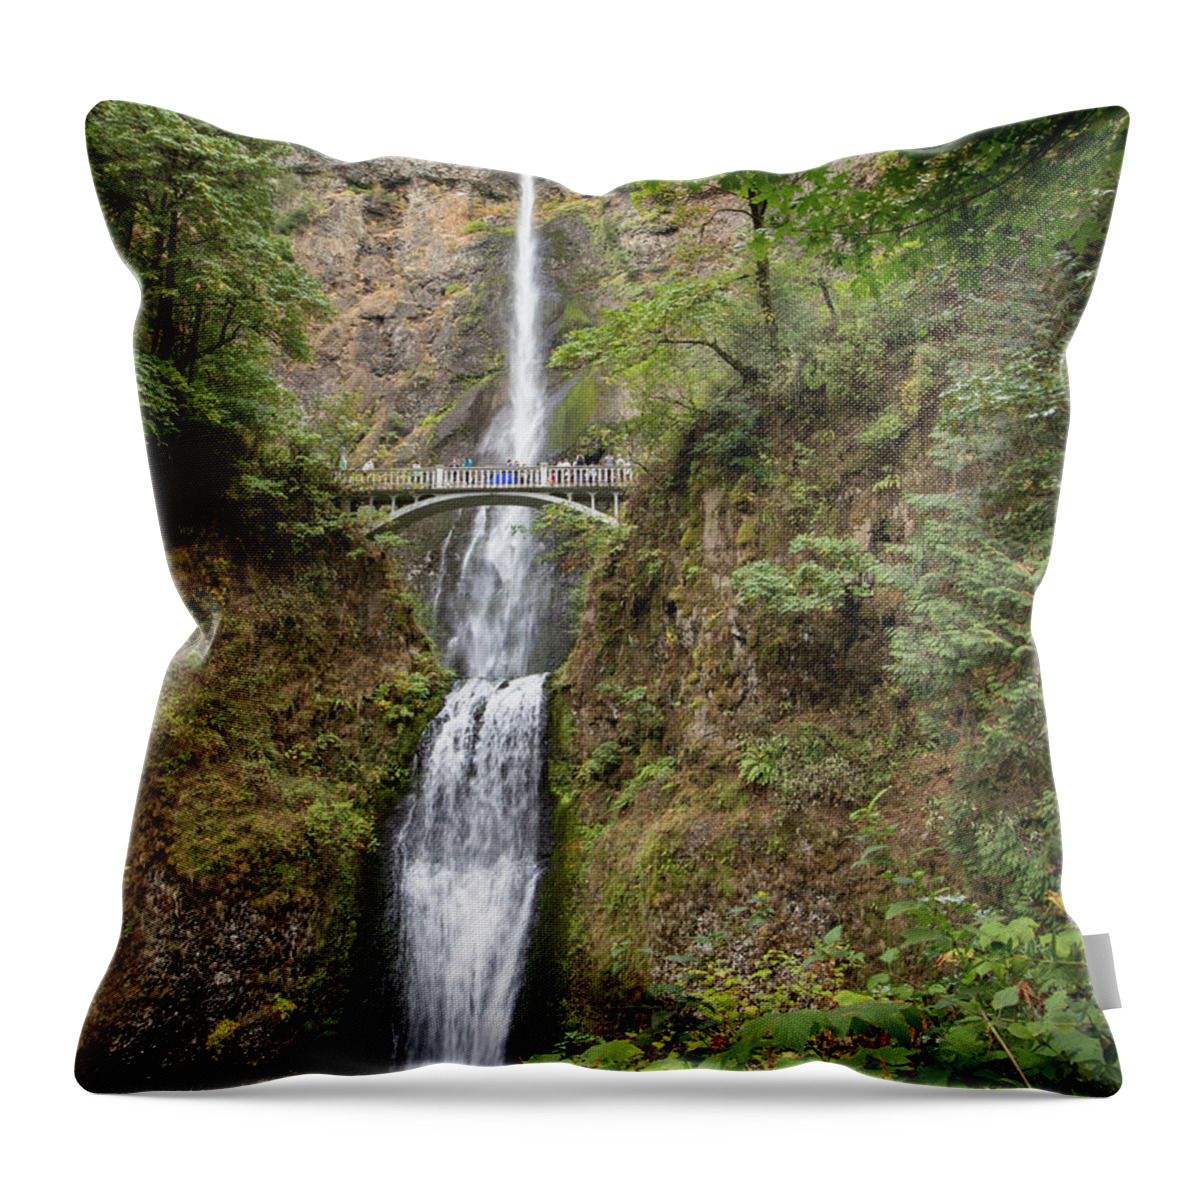 2018 Throw Pillow featuring the photograph Multnomah Falls 2 by Gerri Bigler